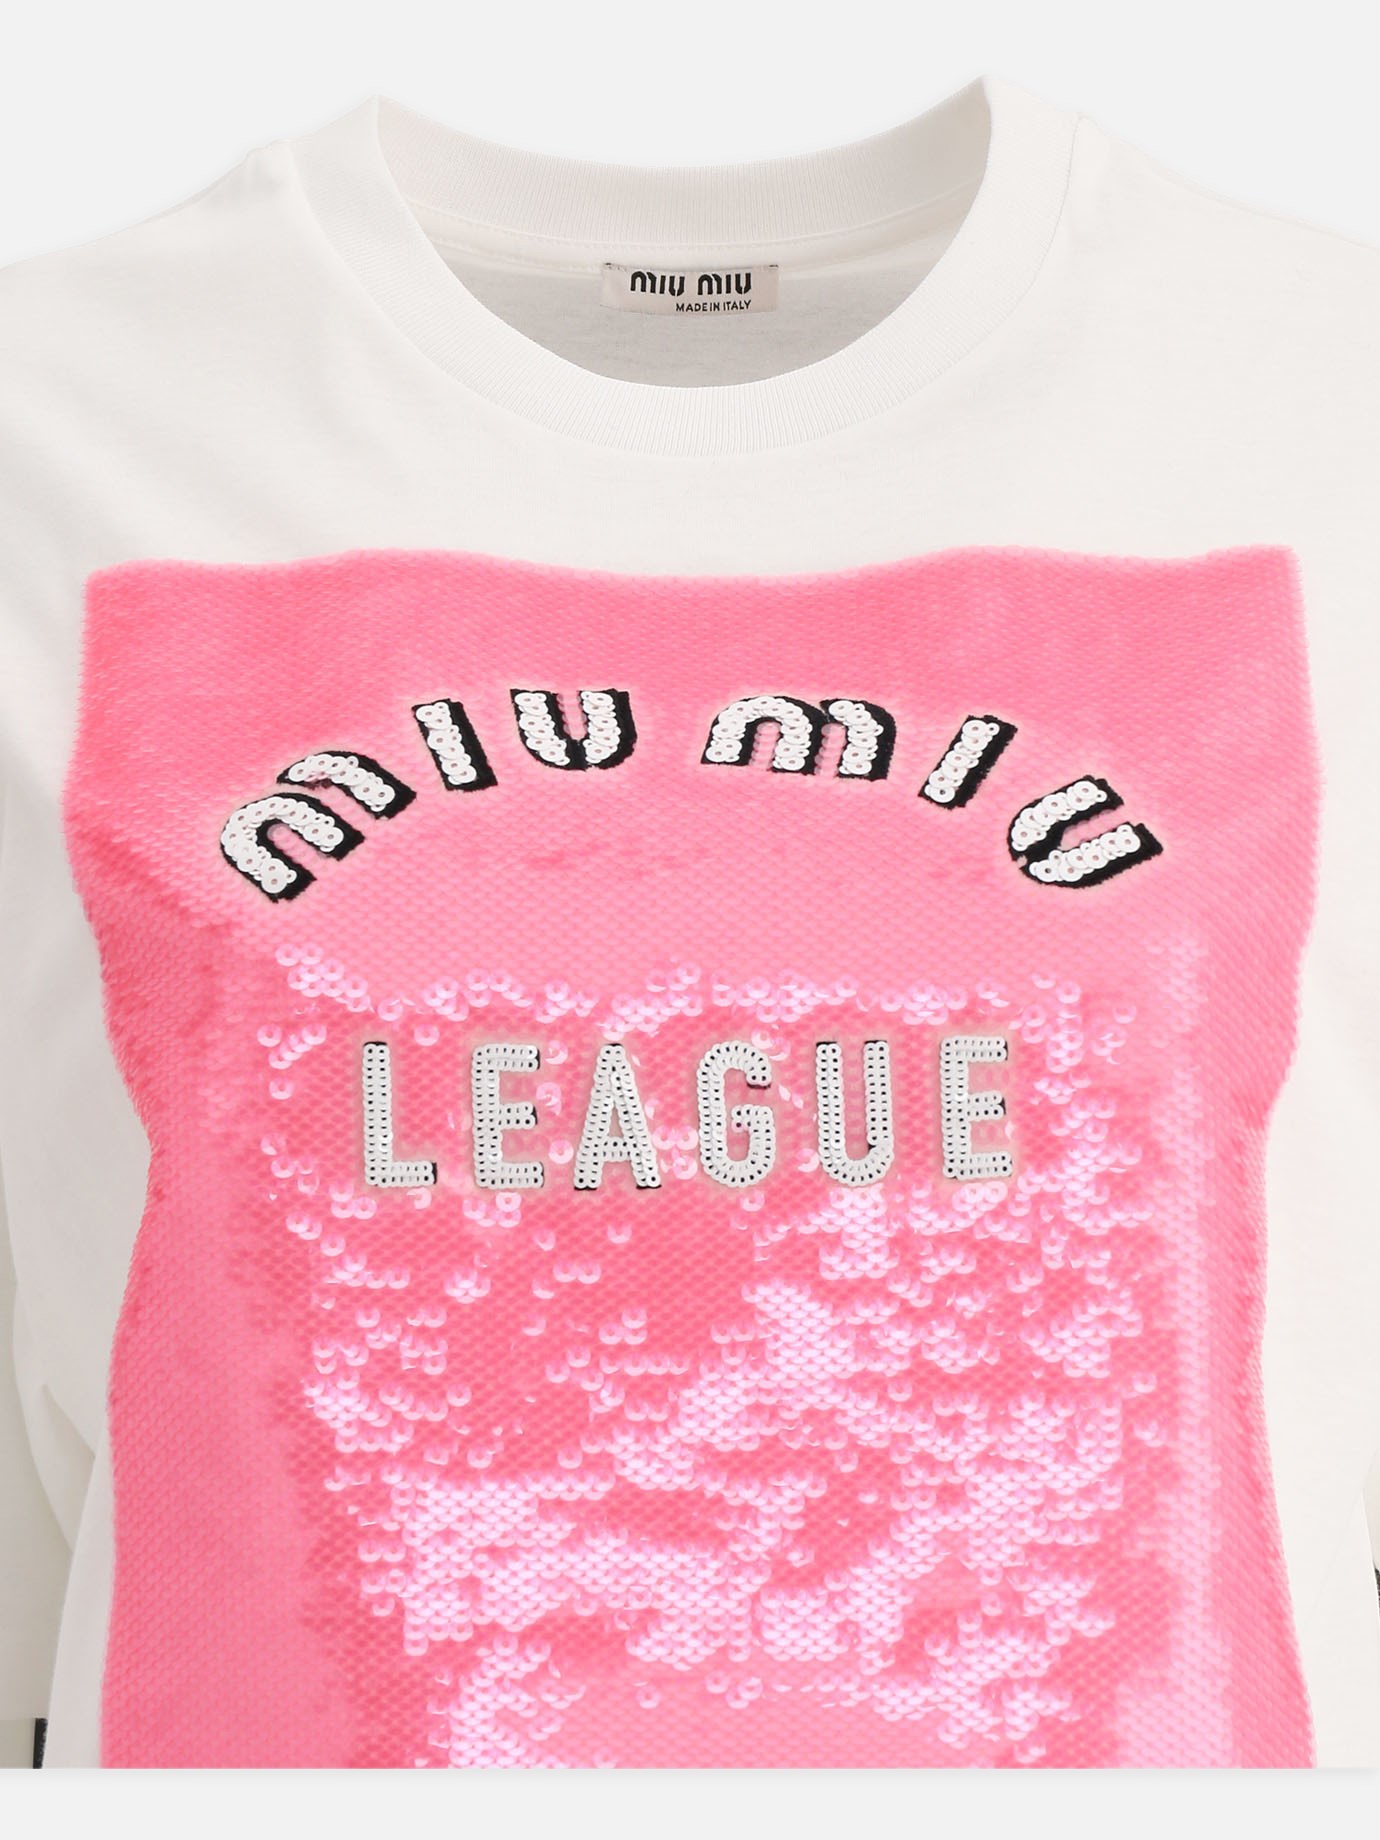  League  sequin t-shirt by Miu Miu